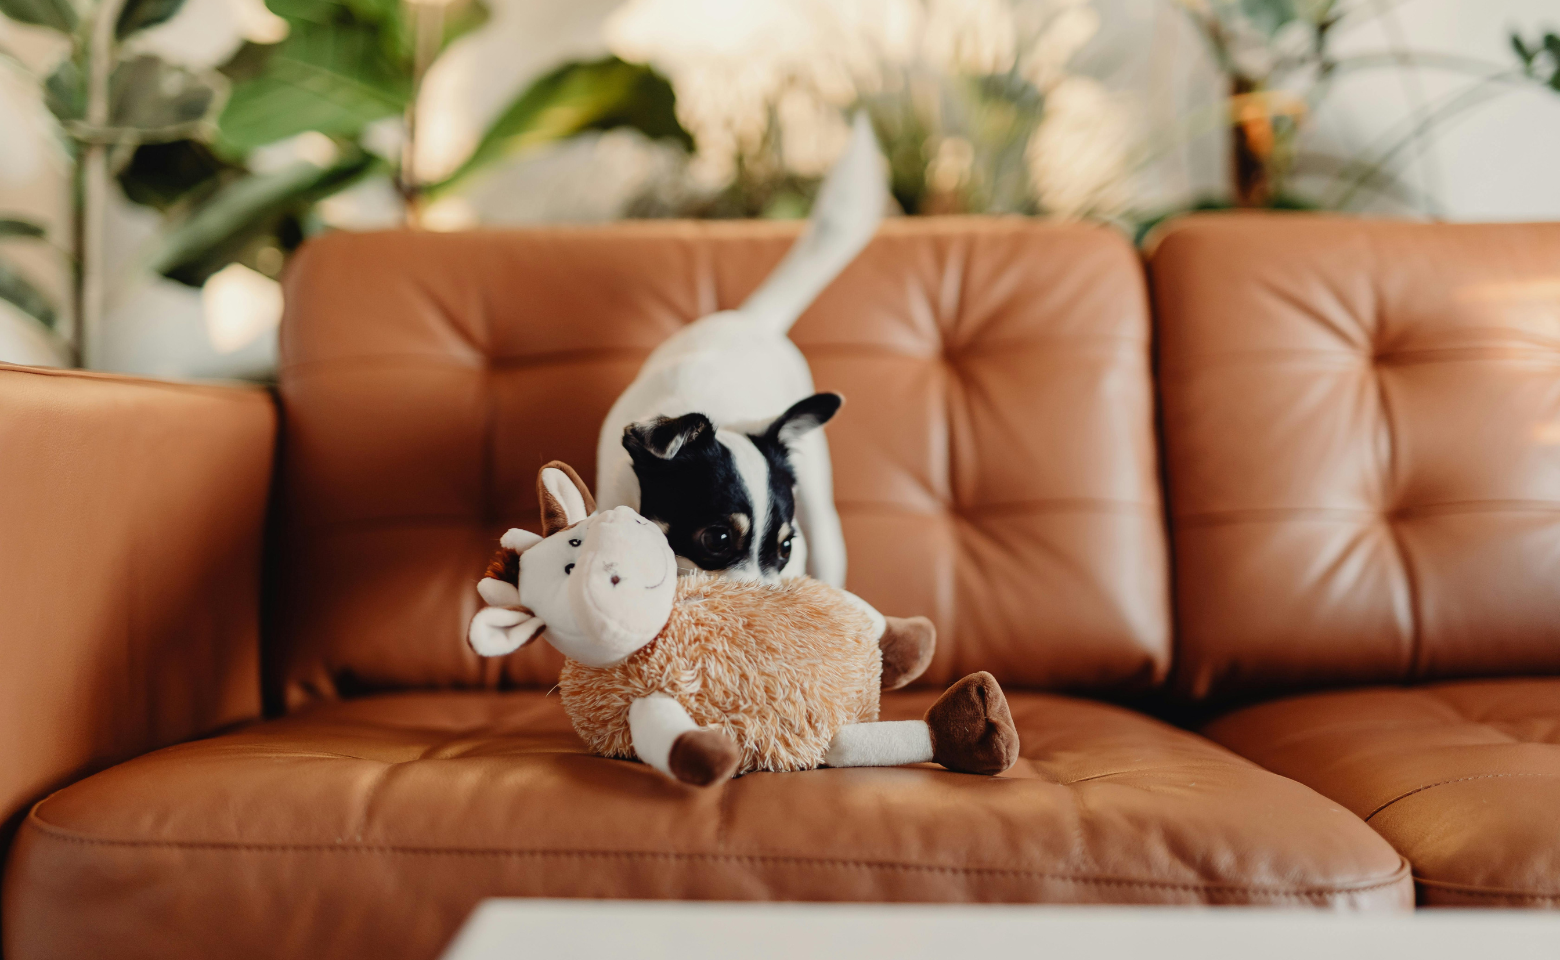 Dog on leather sofa with toy - photo by: Karolina Grabowska